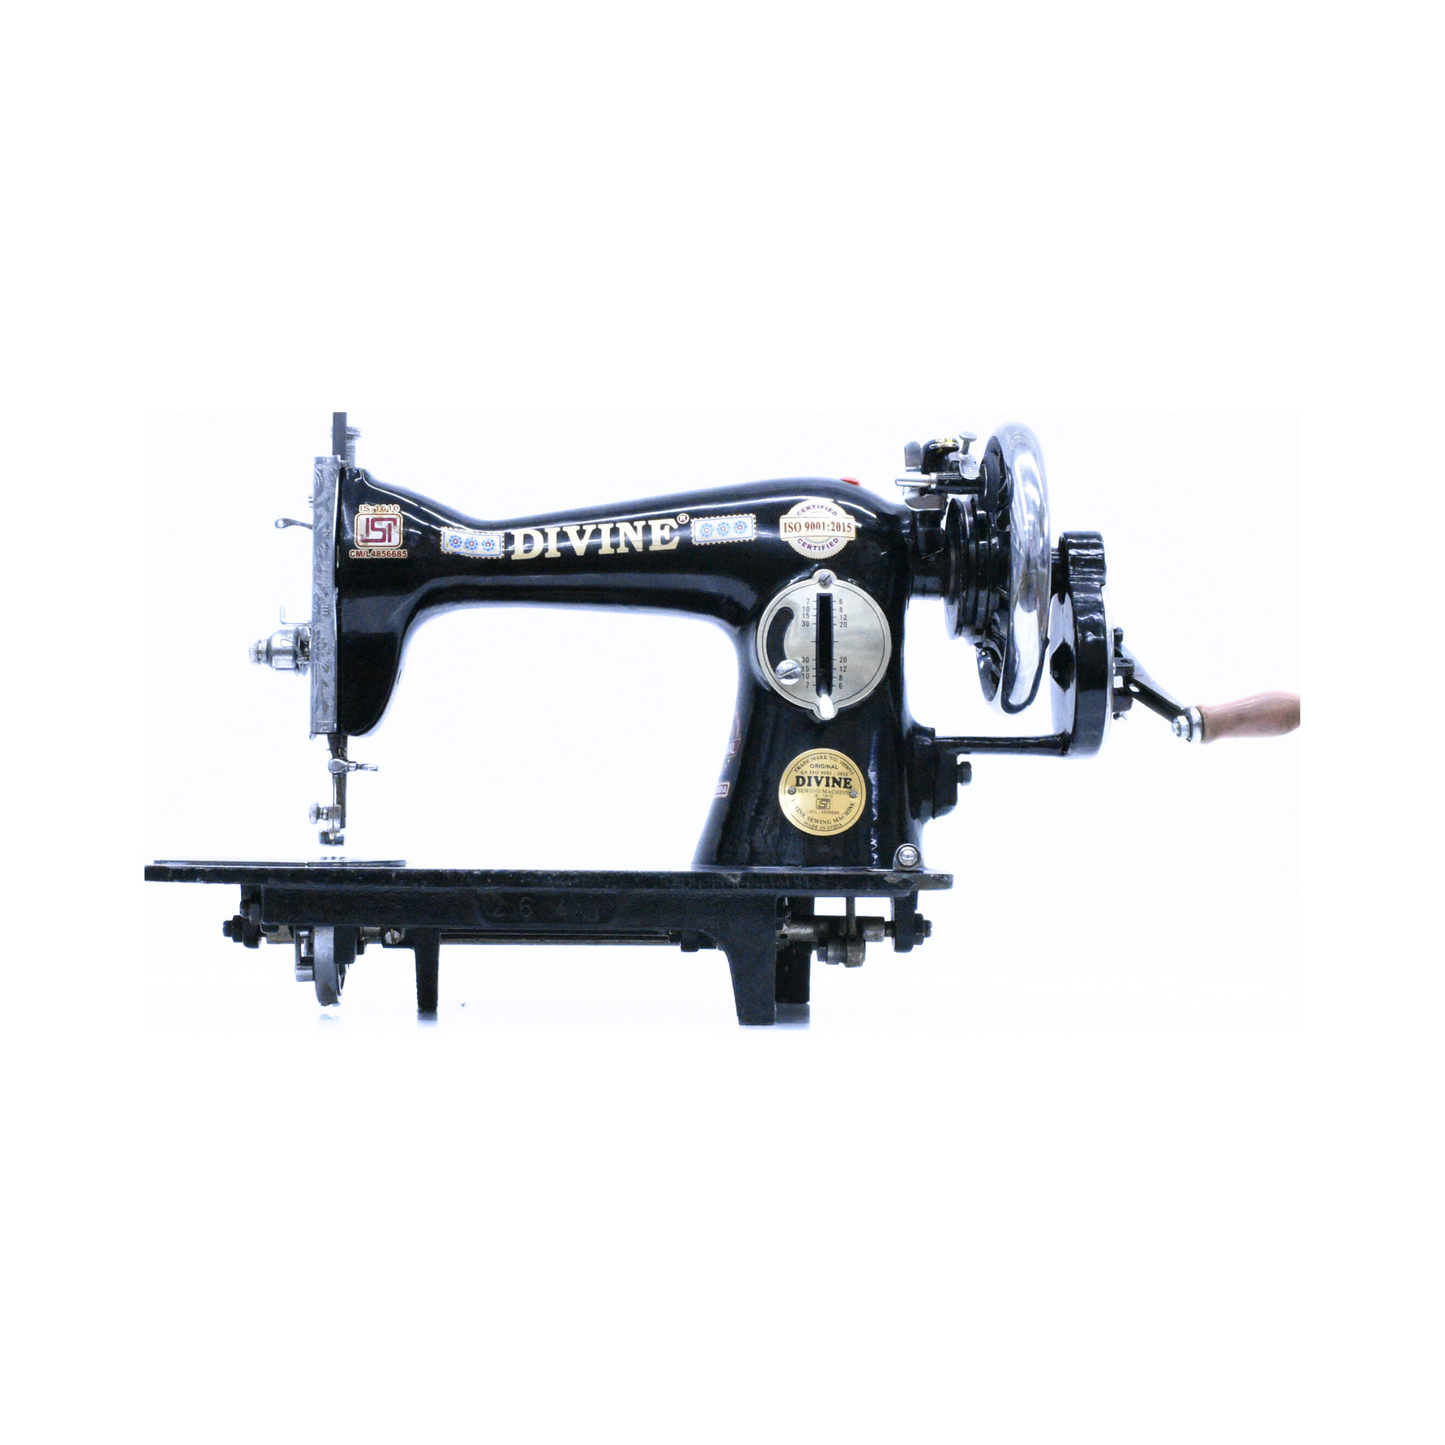 Divine - Vintage sewing machine - Black - Front view